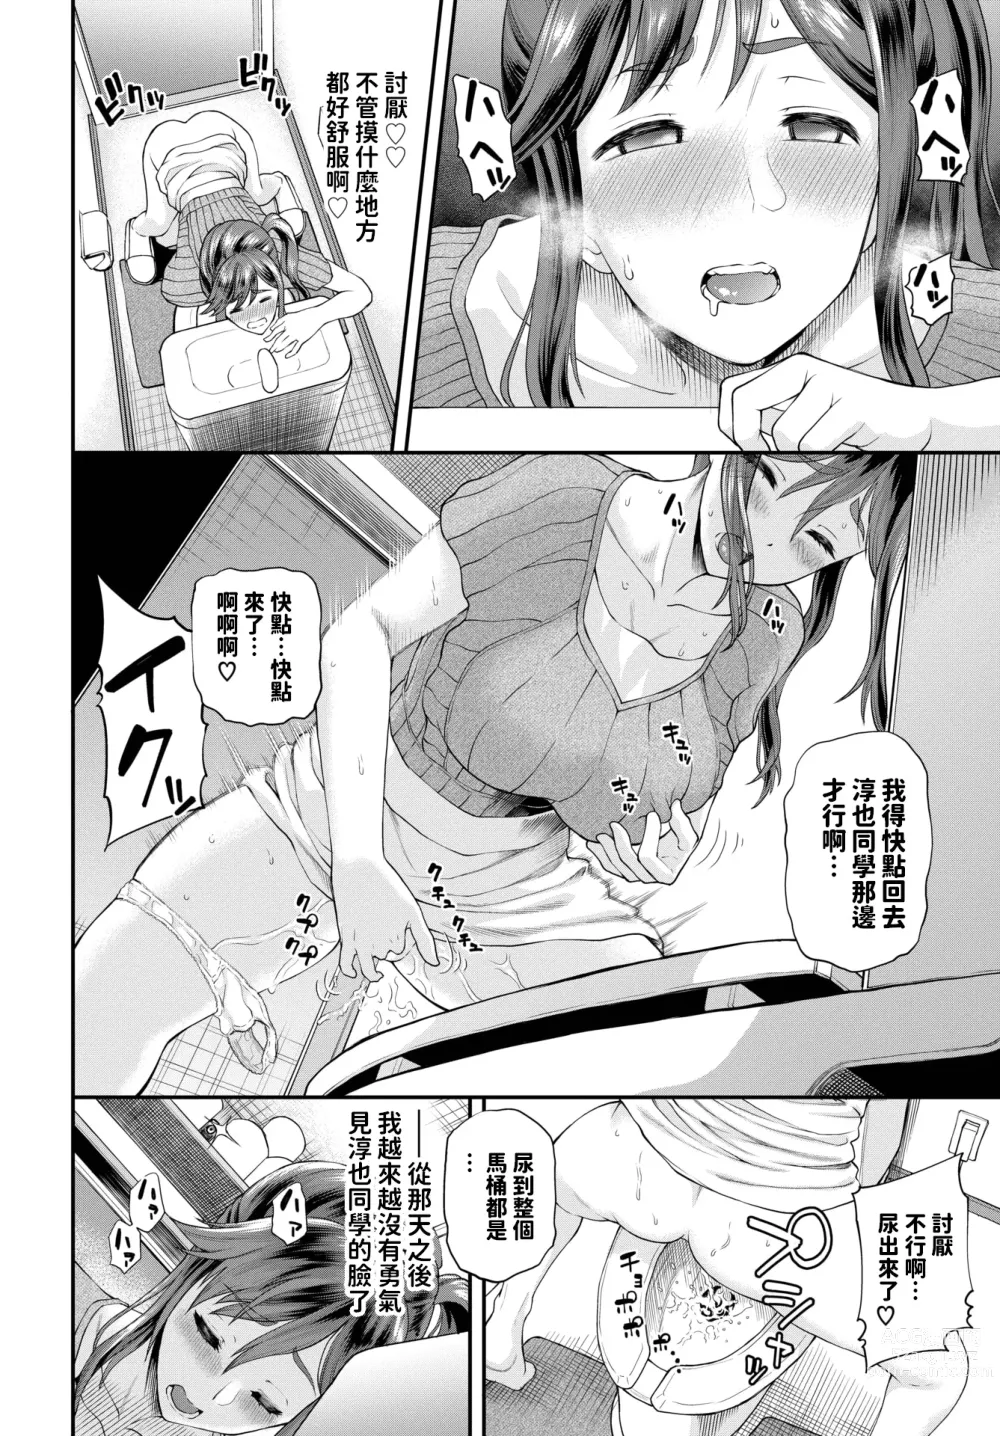 Page 6 of manga Kamimura-sensei ga Ochiru made